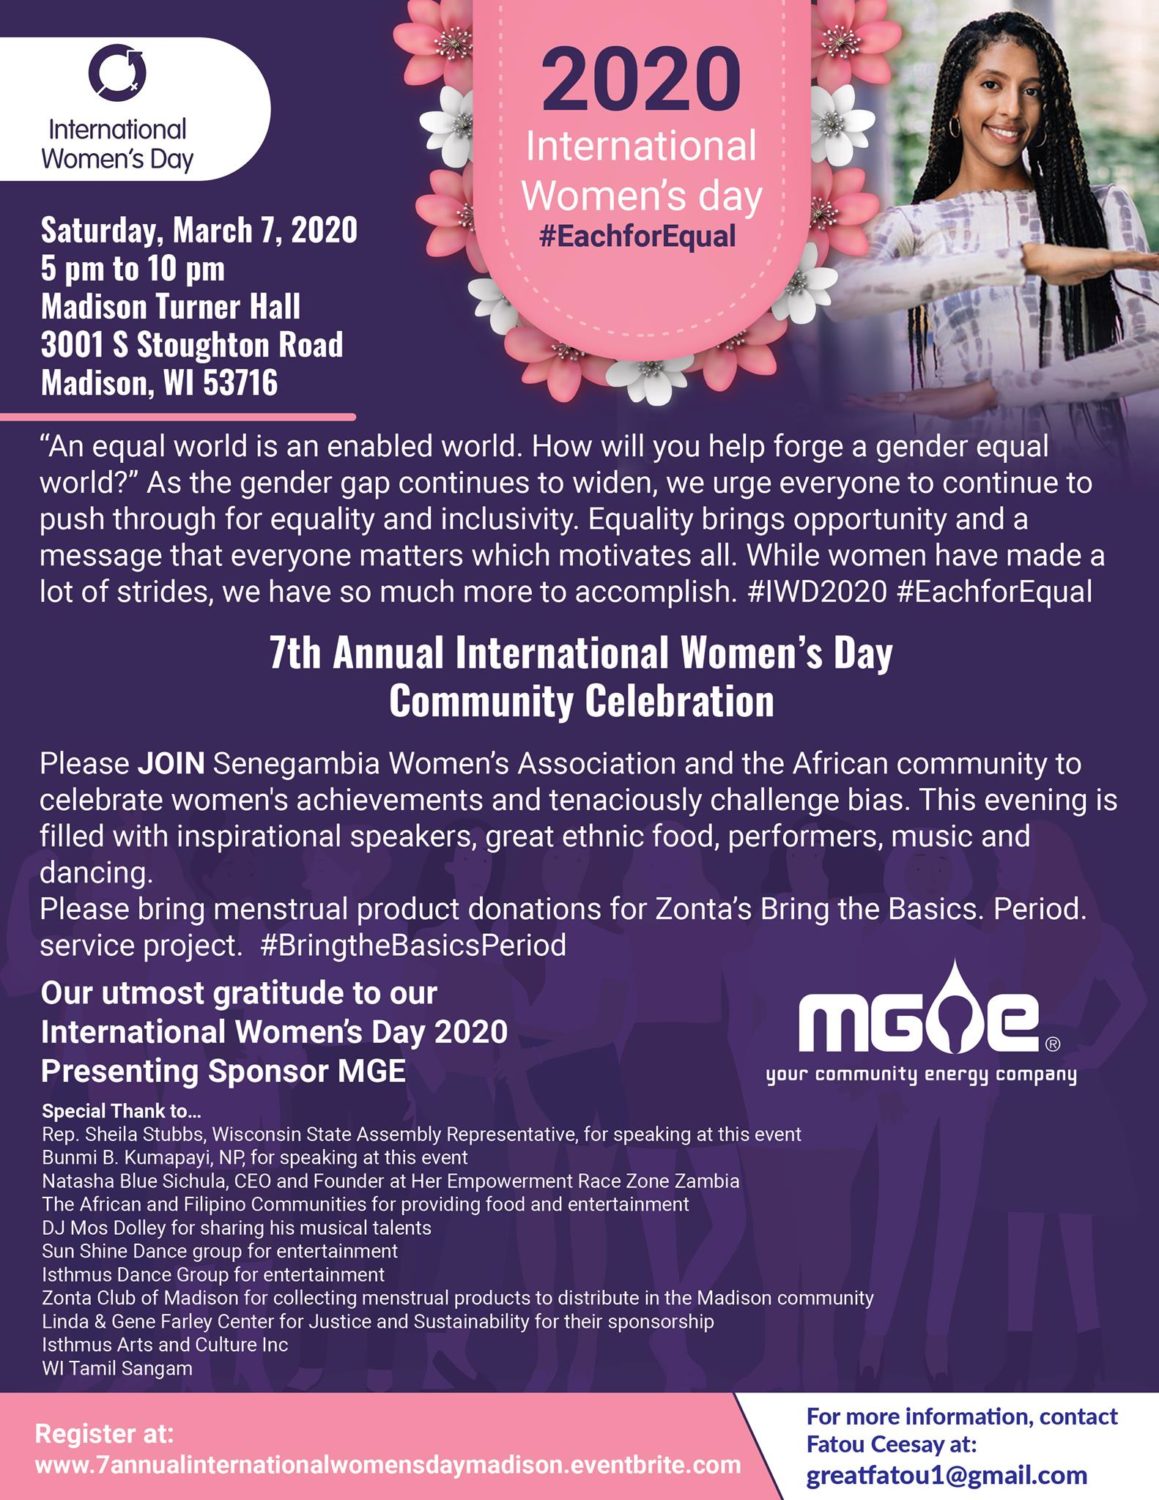 7th Annual International Women’s Day Community Celebration | Madison365